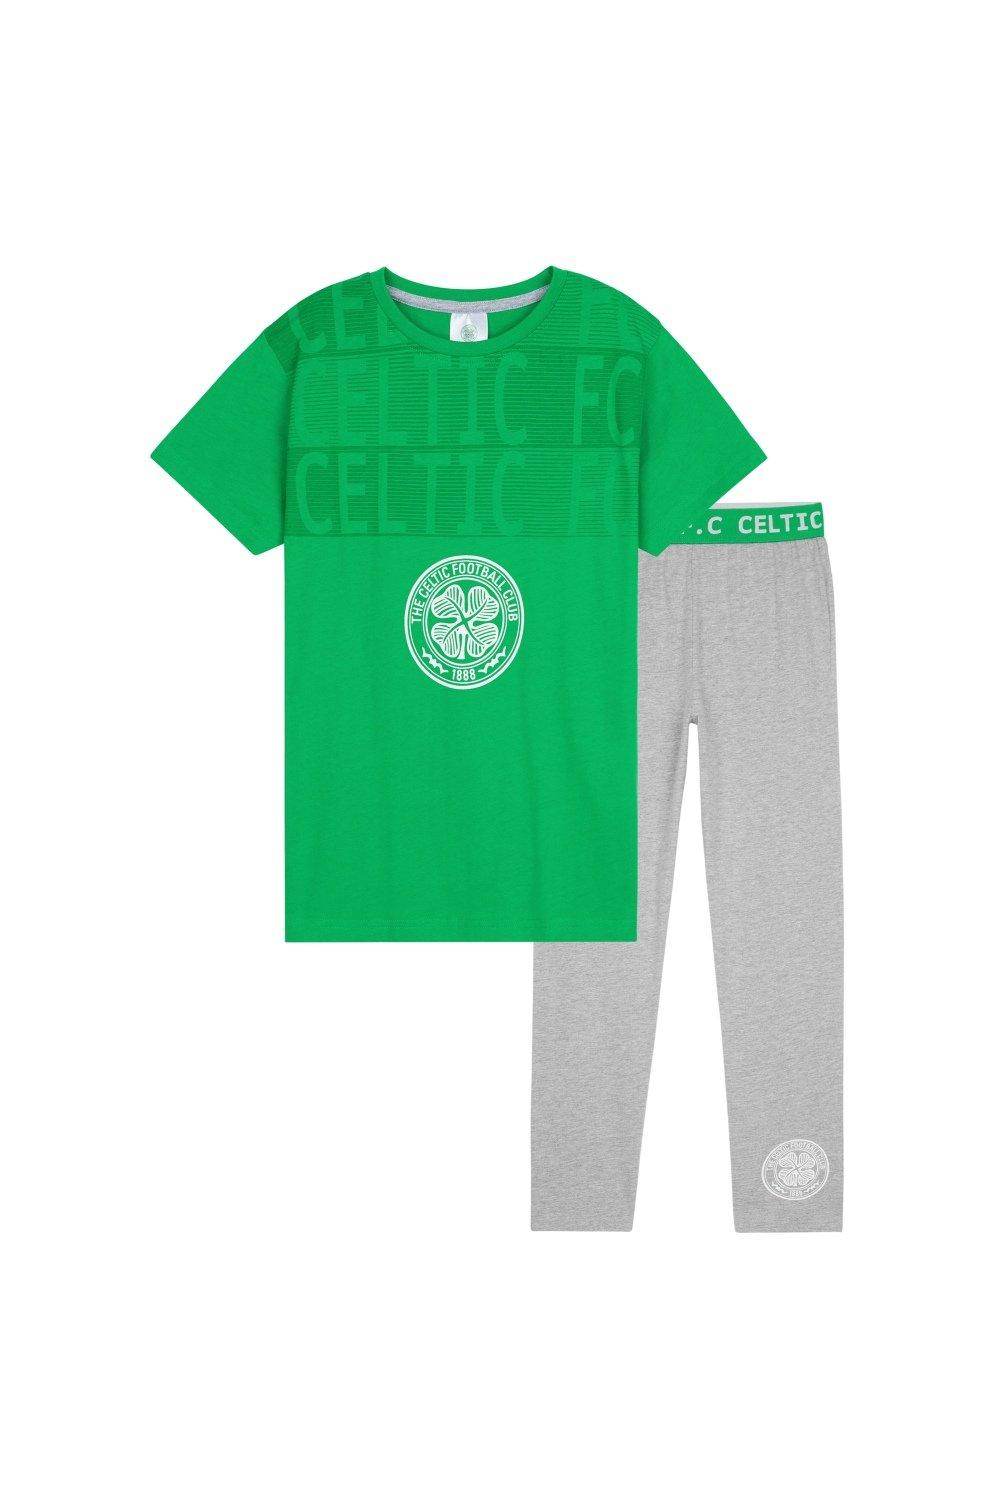 Football Fan Pyjama Set T-Shirt And Bottoms